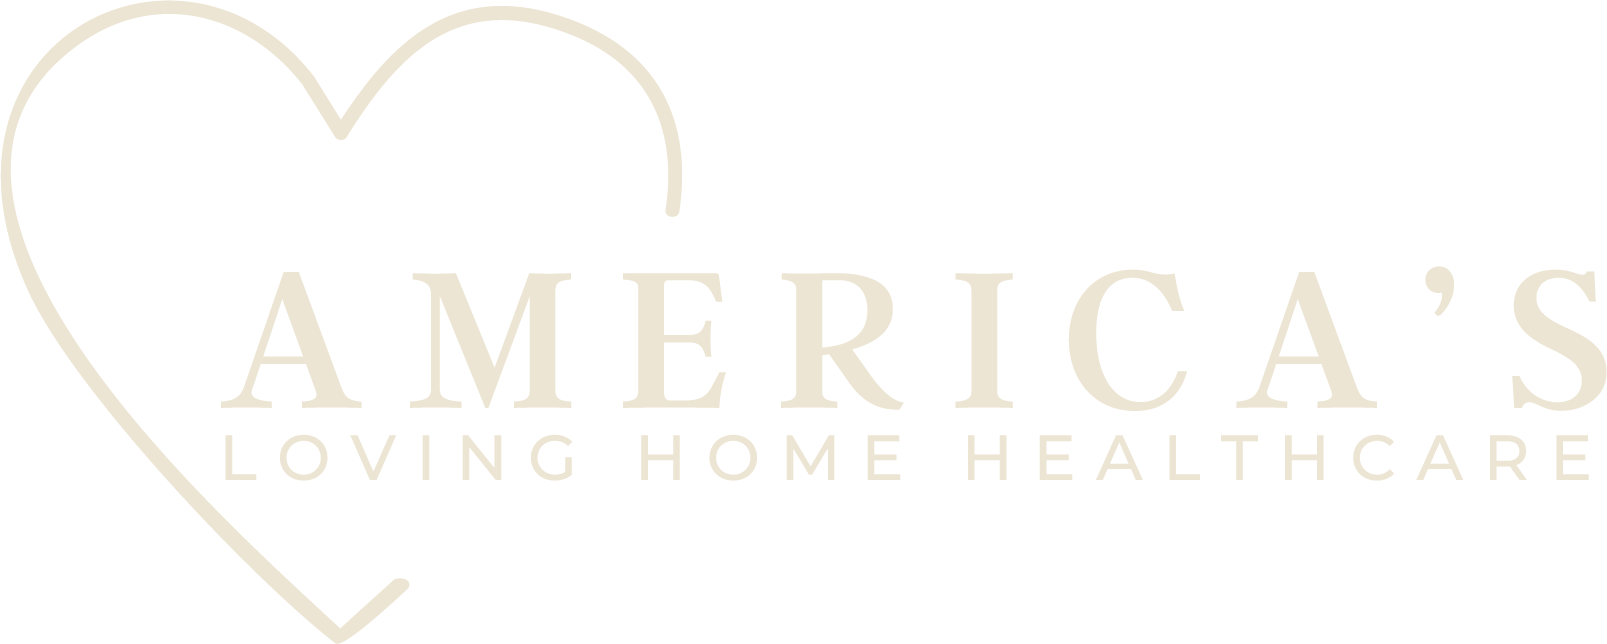 America’s Loving Home Healthcare Logo Cream